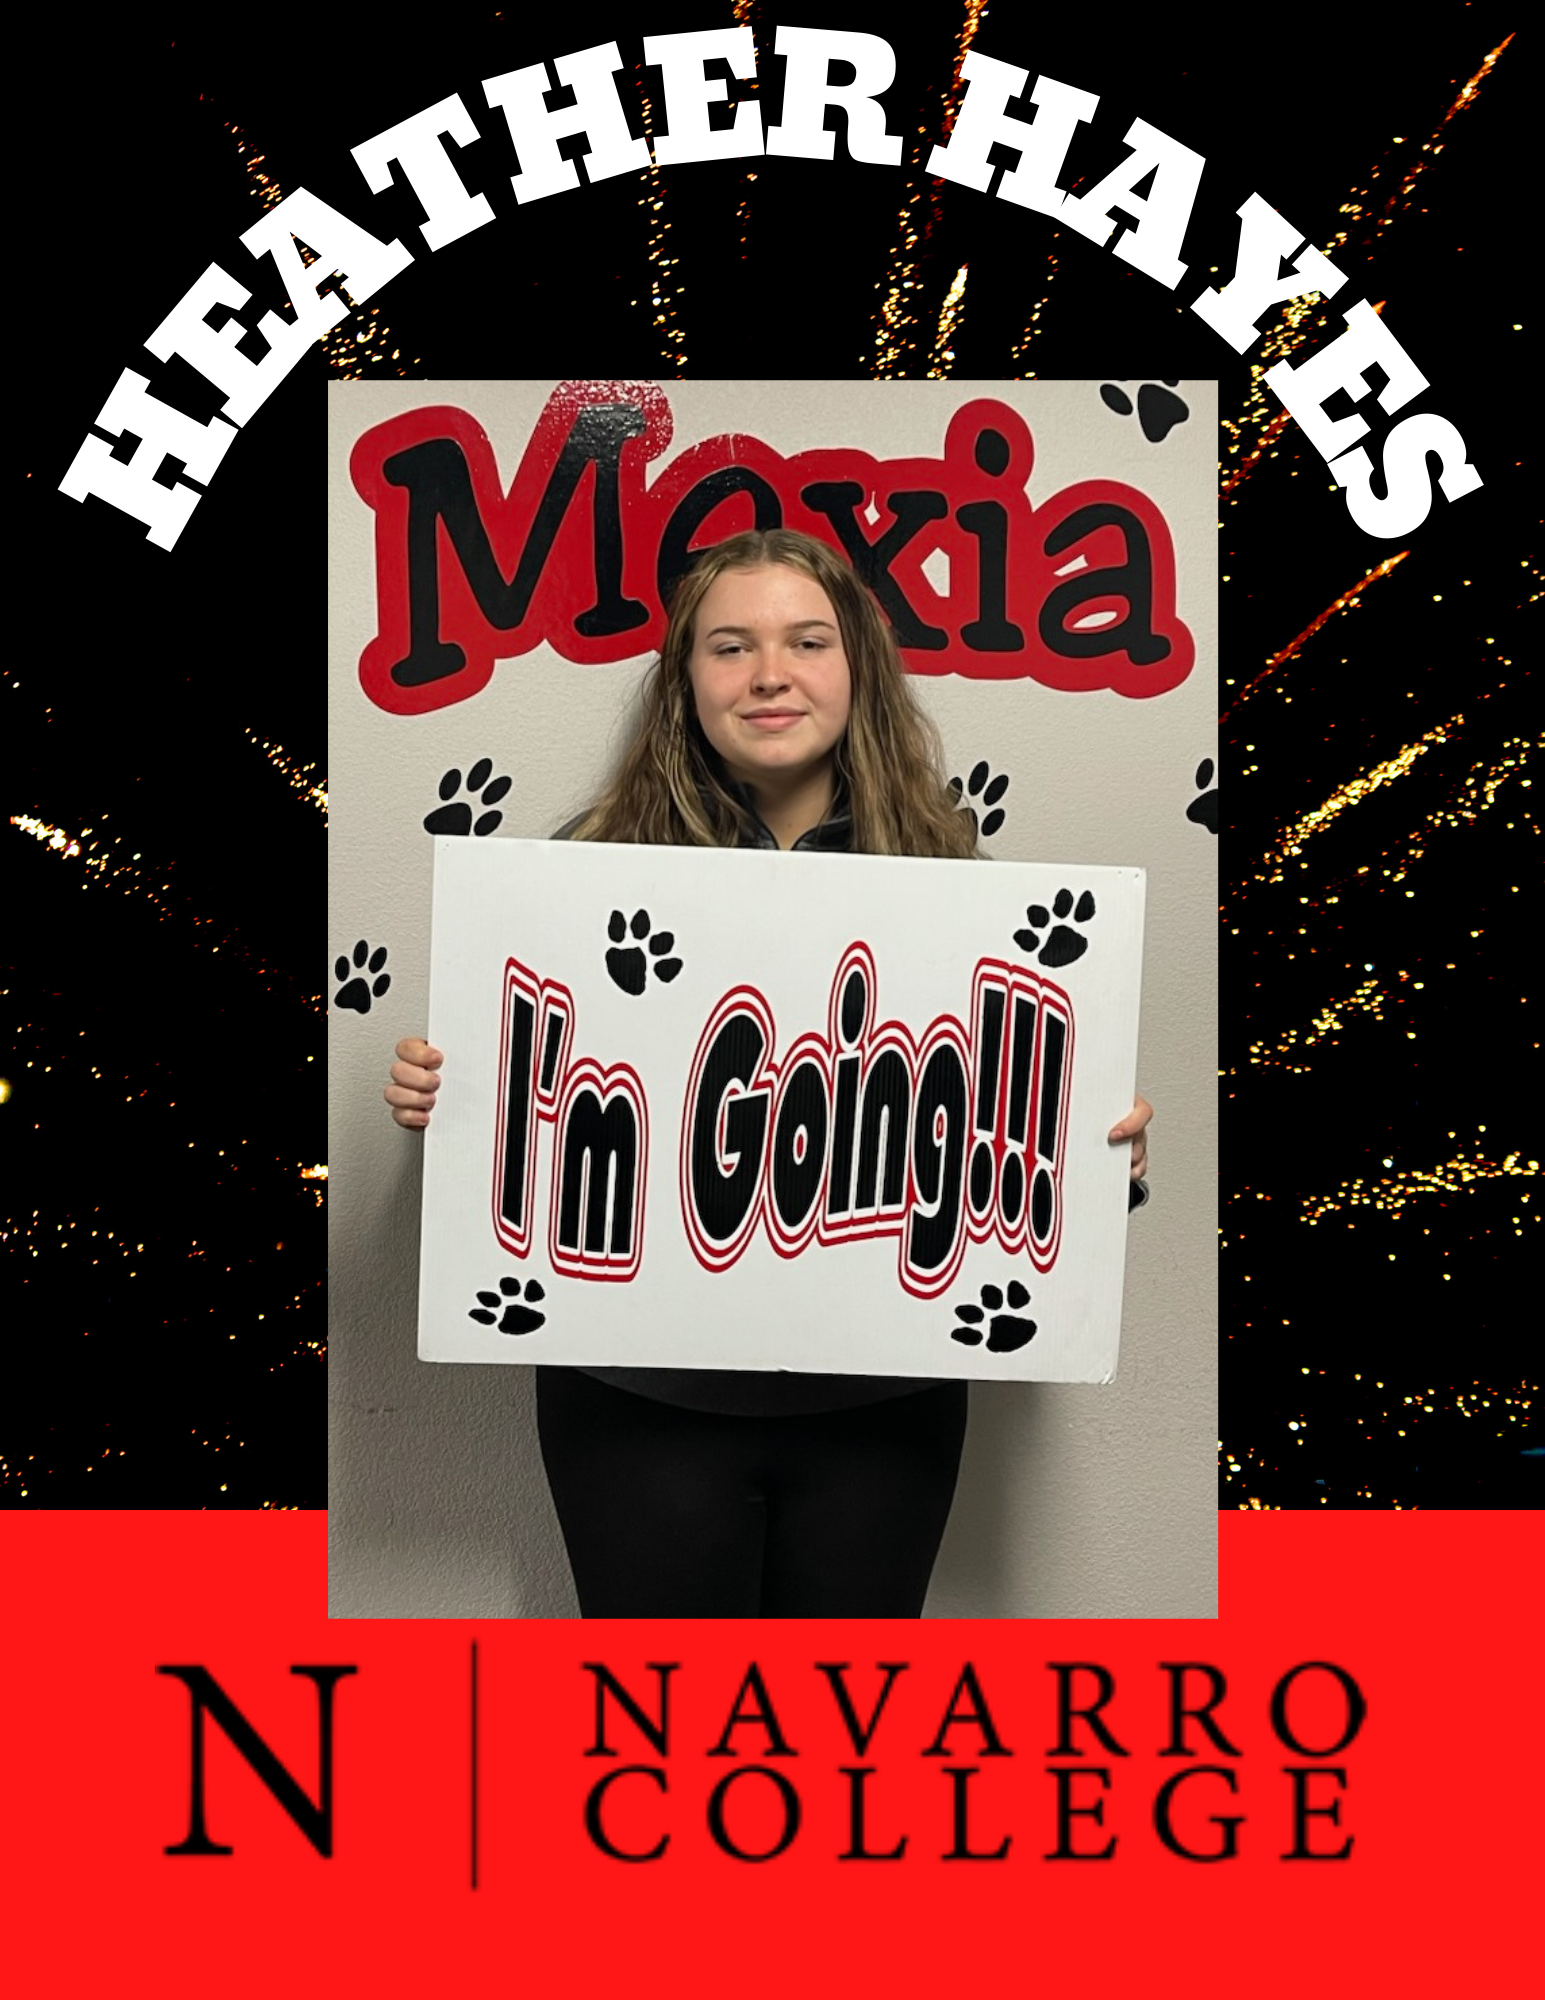 Heather Hayes - I'm Going! - Navarro College